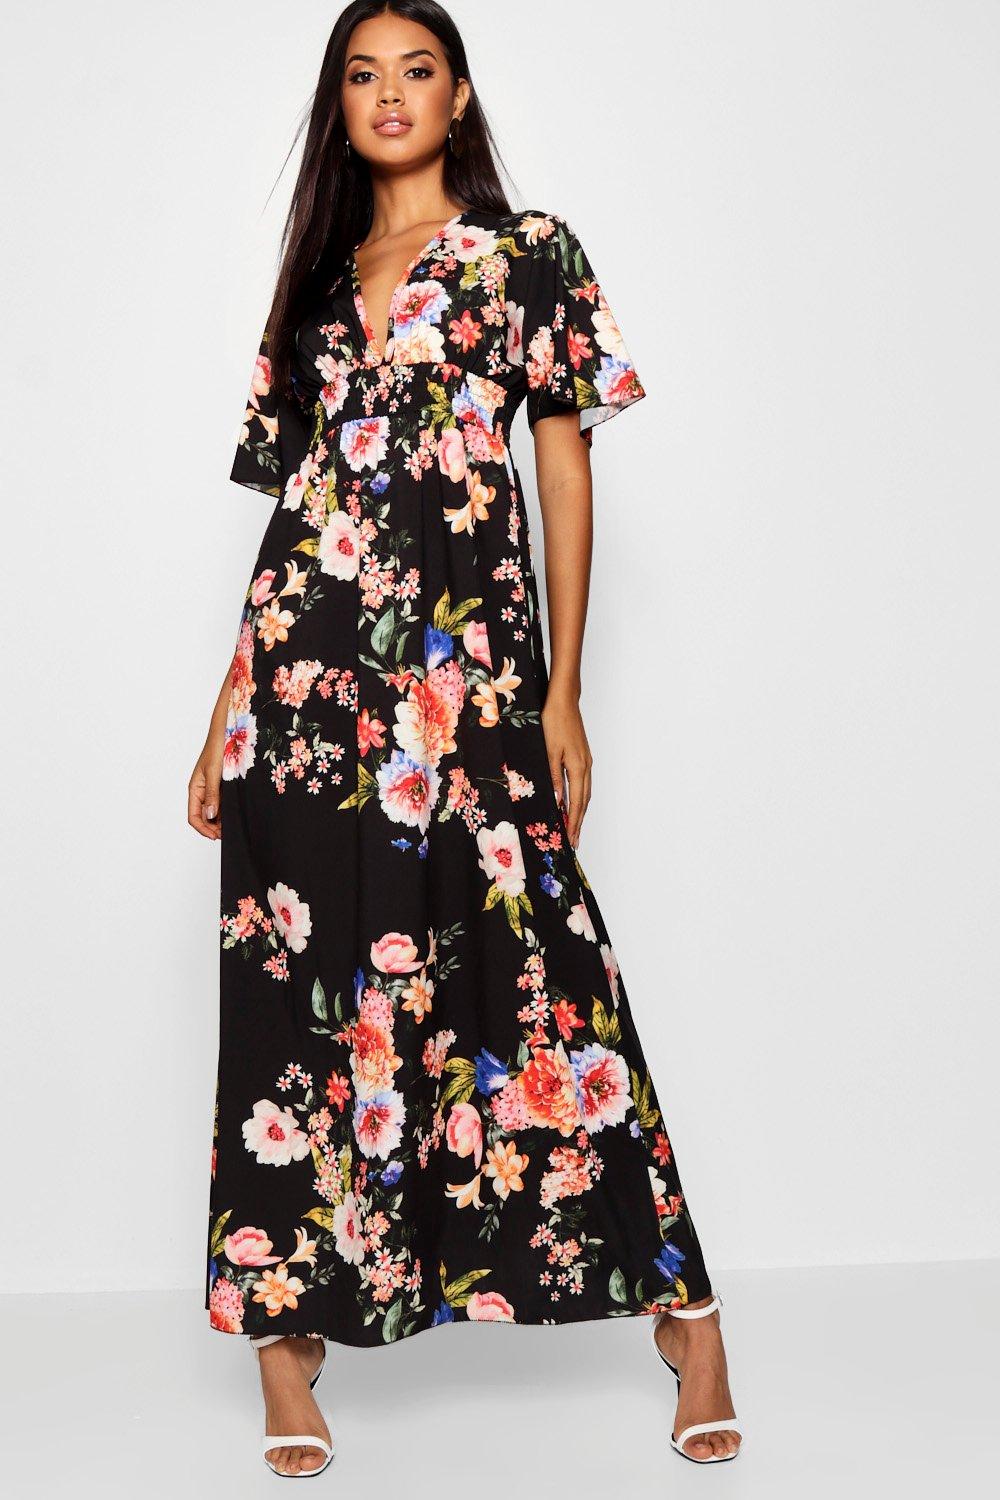 Boohoo Long Summer Dresses on Sale, UP TO 69% OFF |  www.editorialelpirata.com